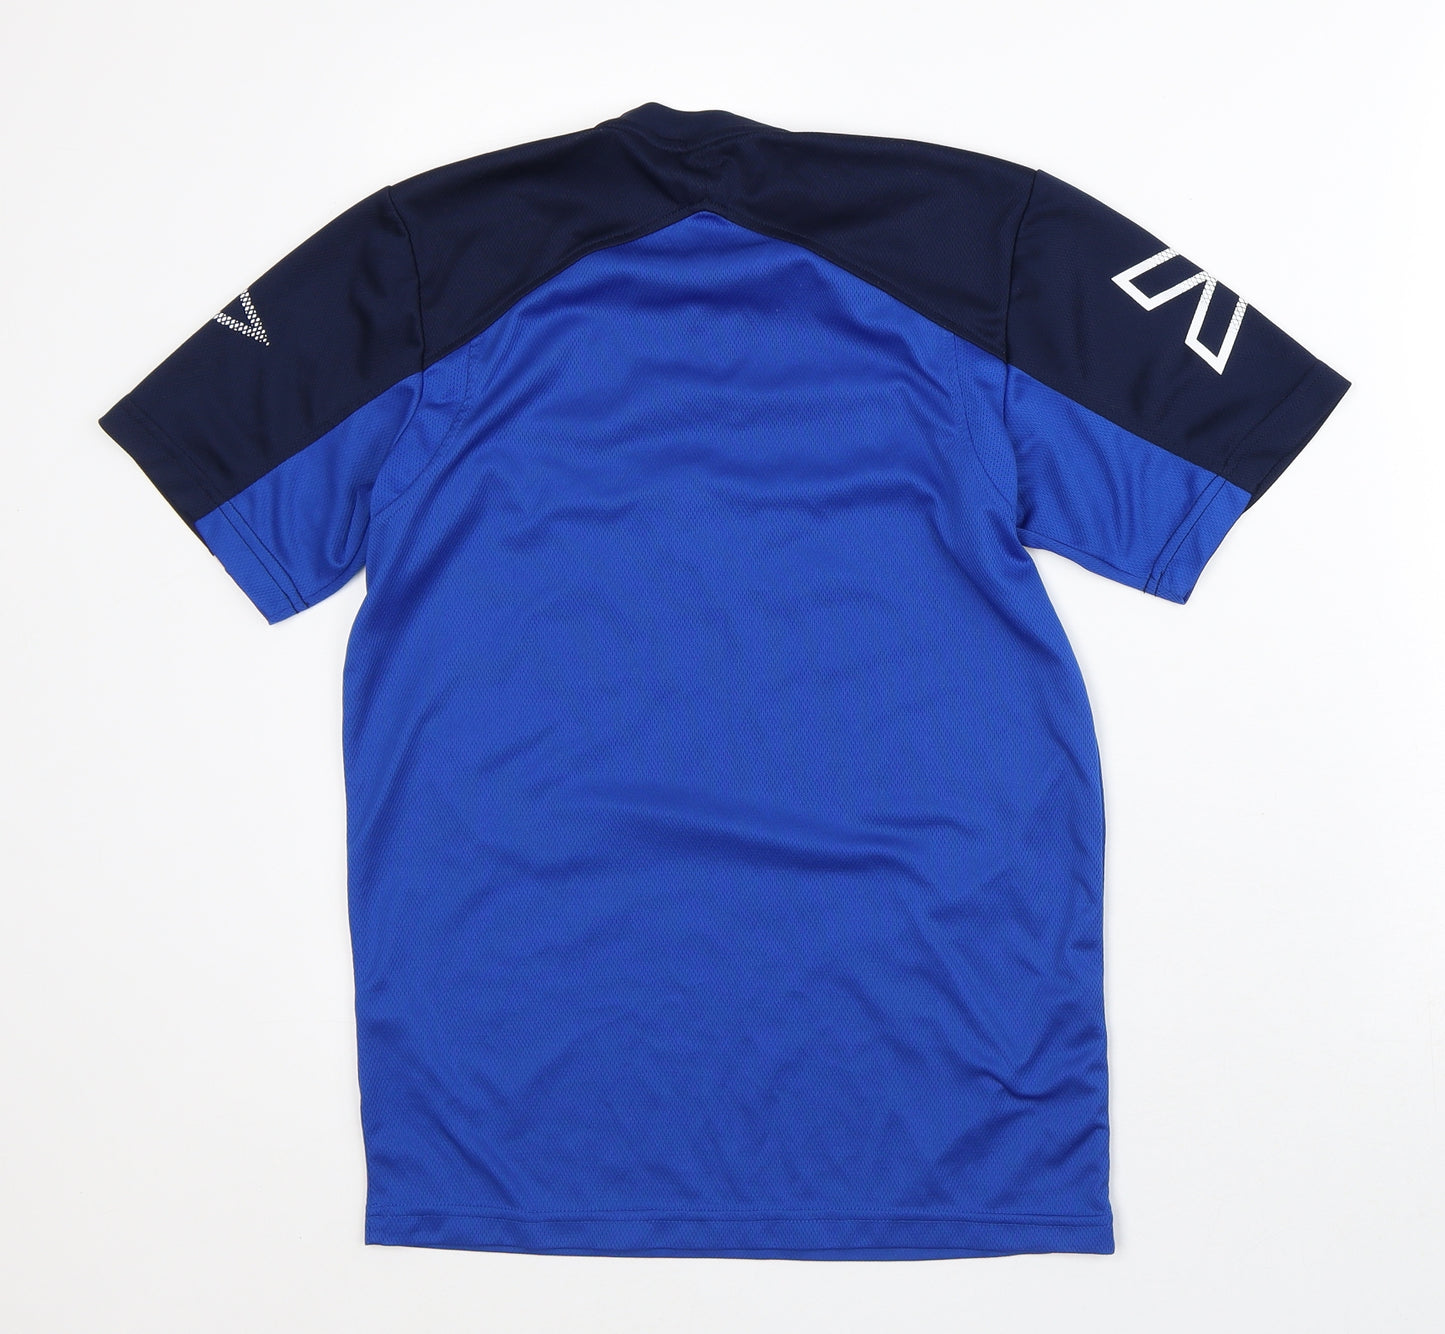 Mitre Mens Blue Striped Polyester Basic T-Shirt Size S Crew Neck